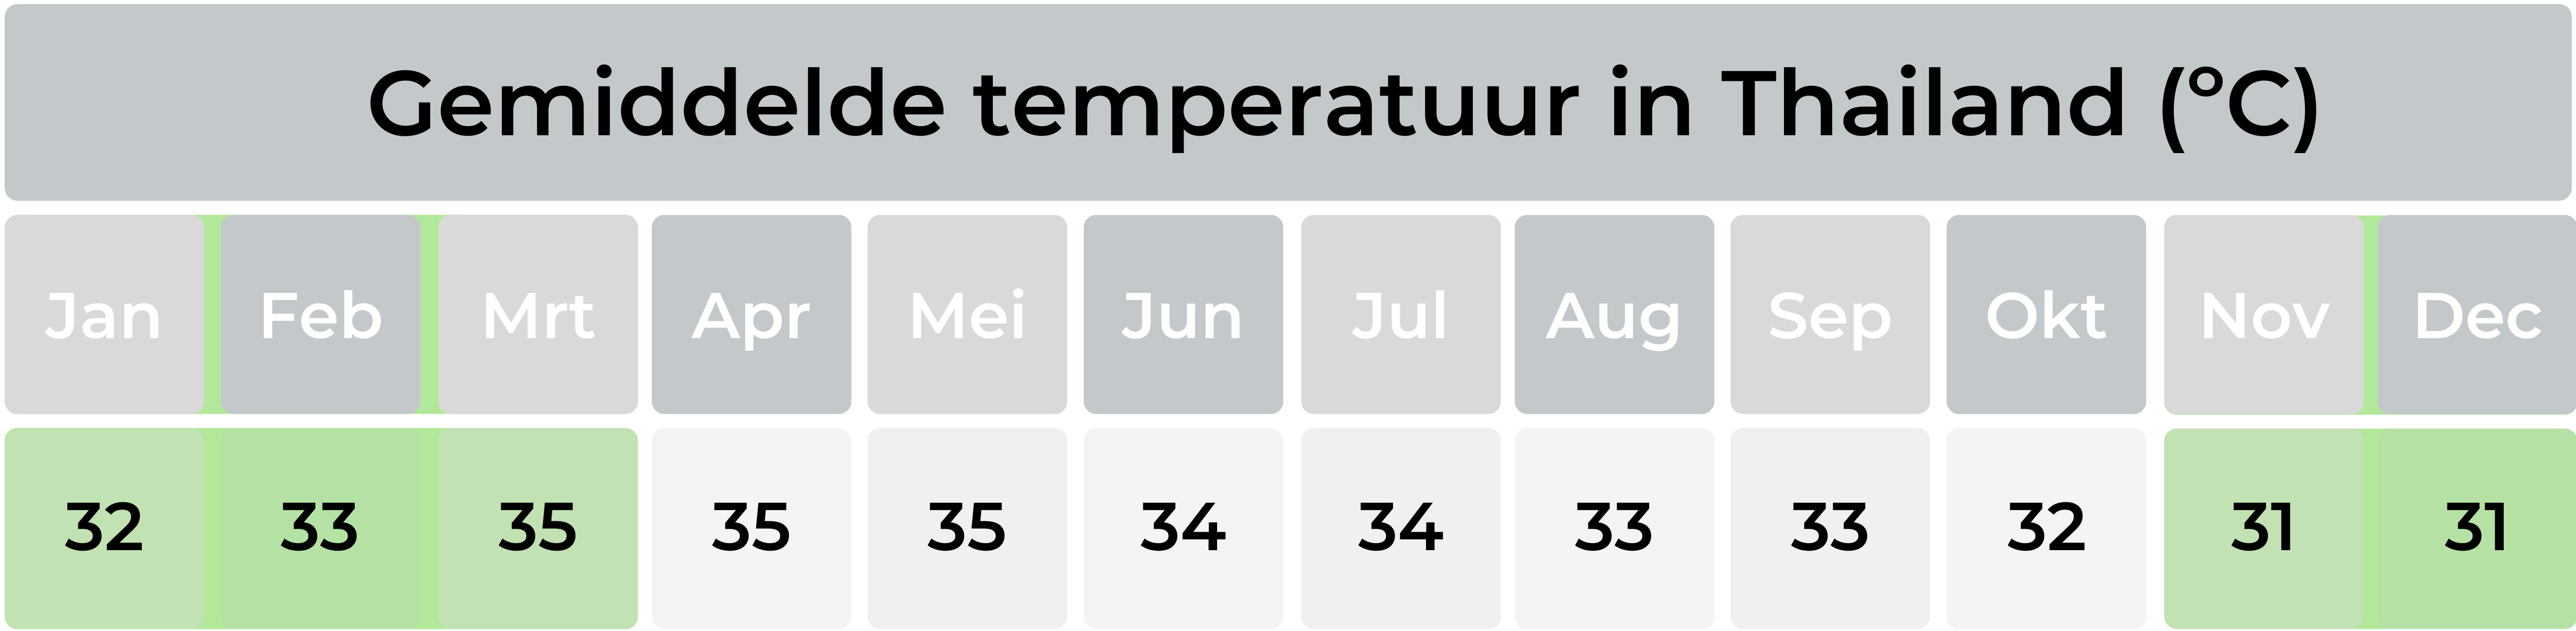 Gemiddelde temperatuur in Thailand